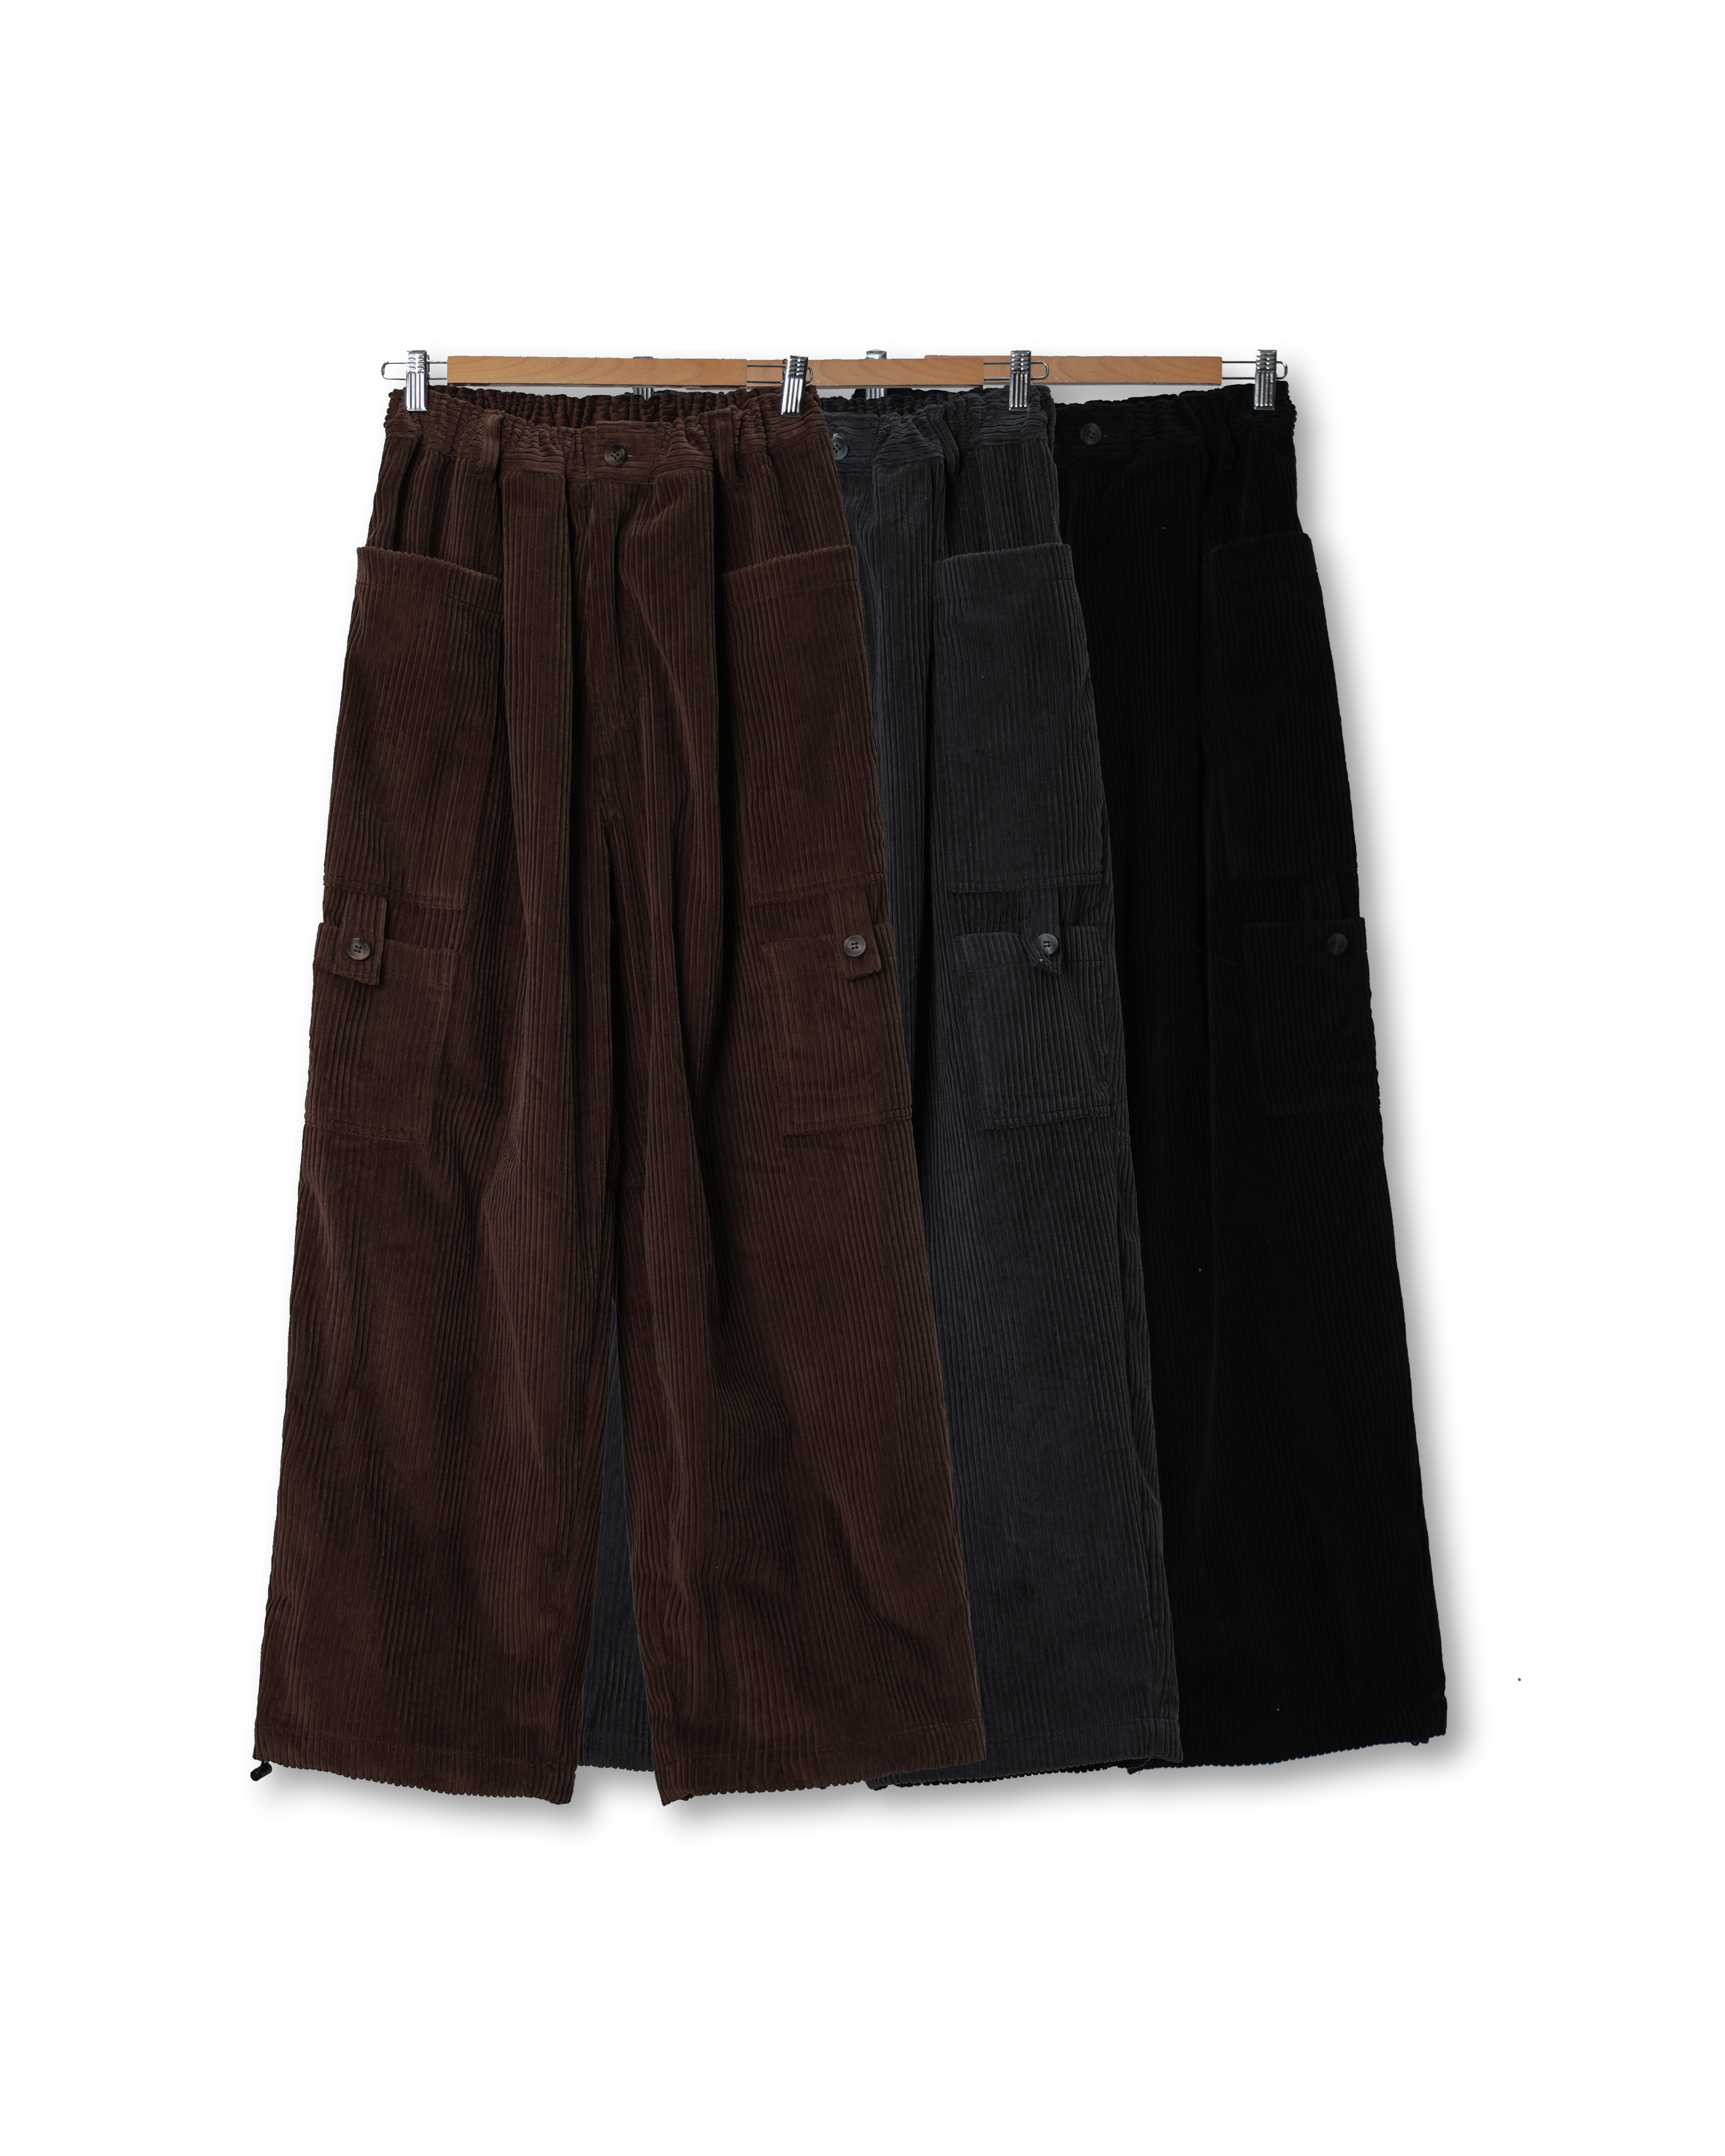 WOAT Corduroy Snap Pocket Fatigue Pants (Black/Charcoal/Brown)